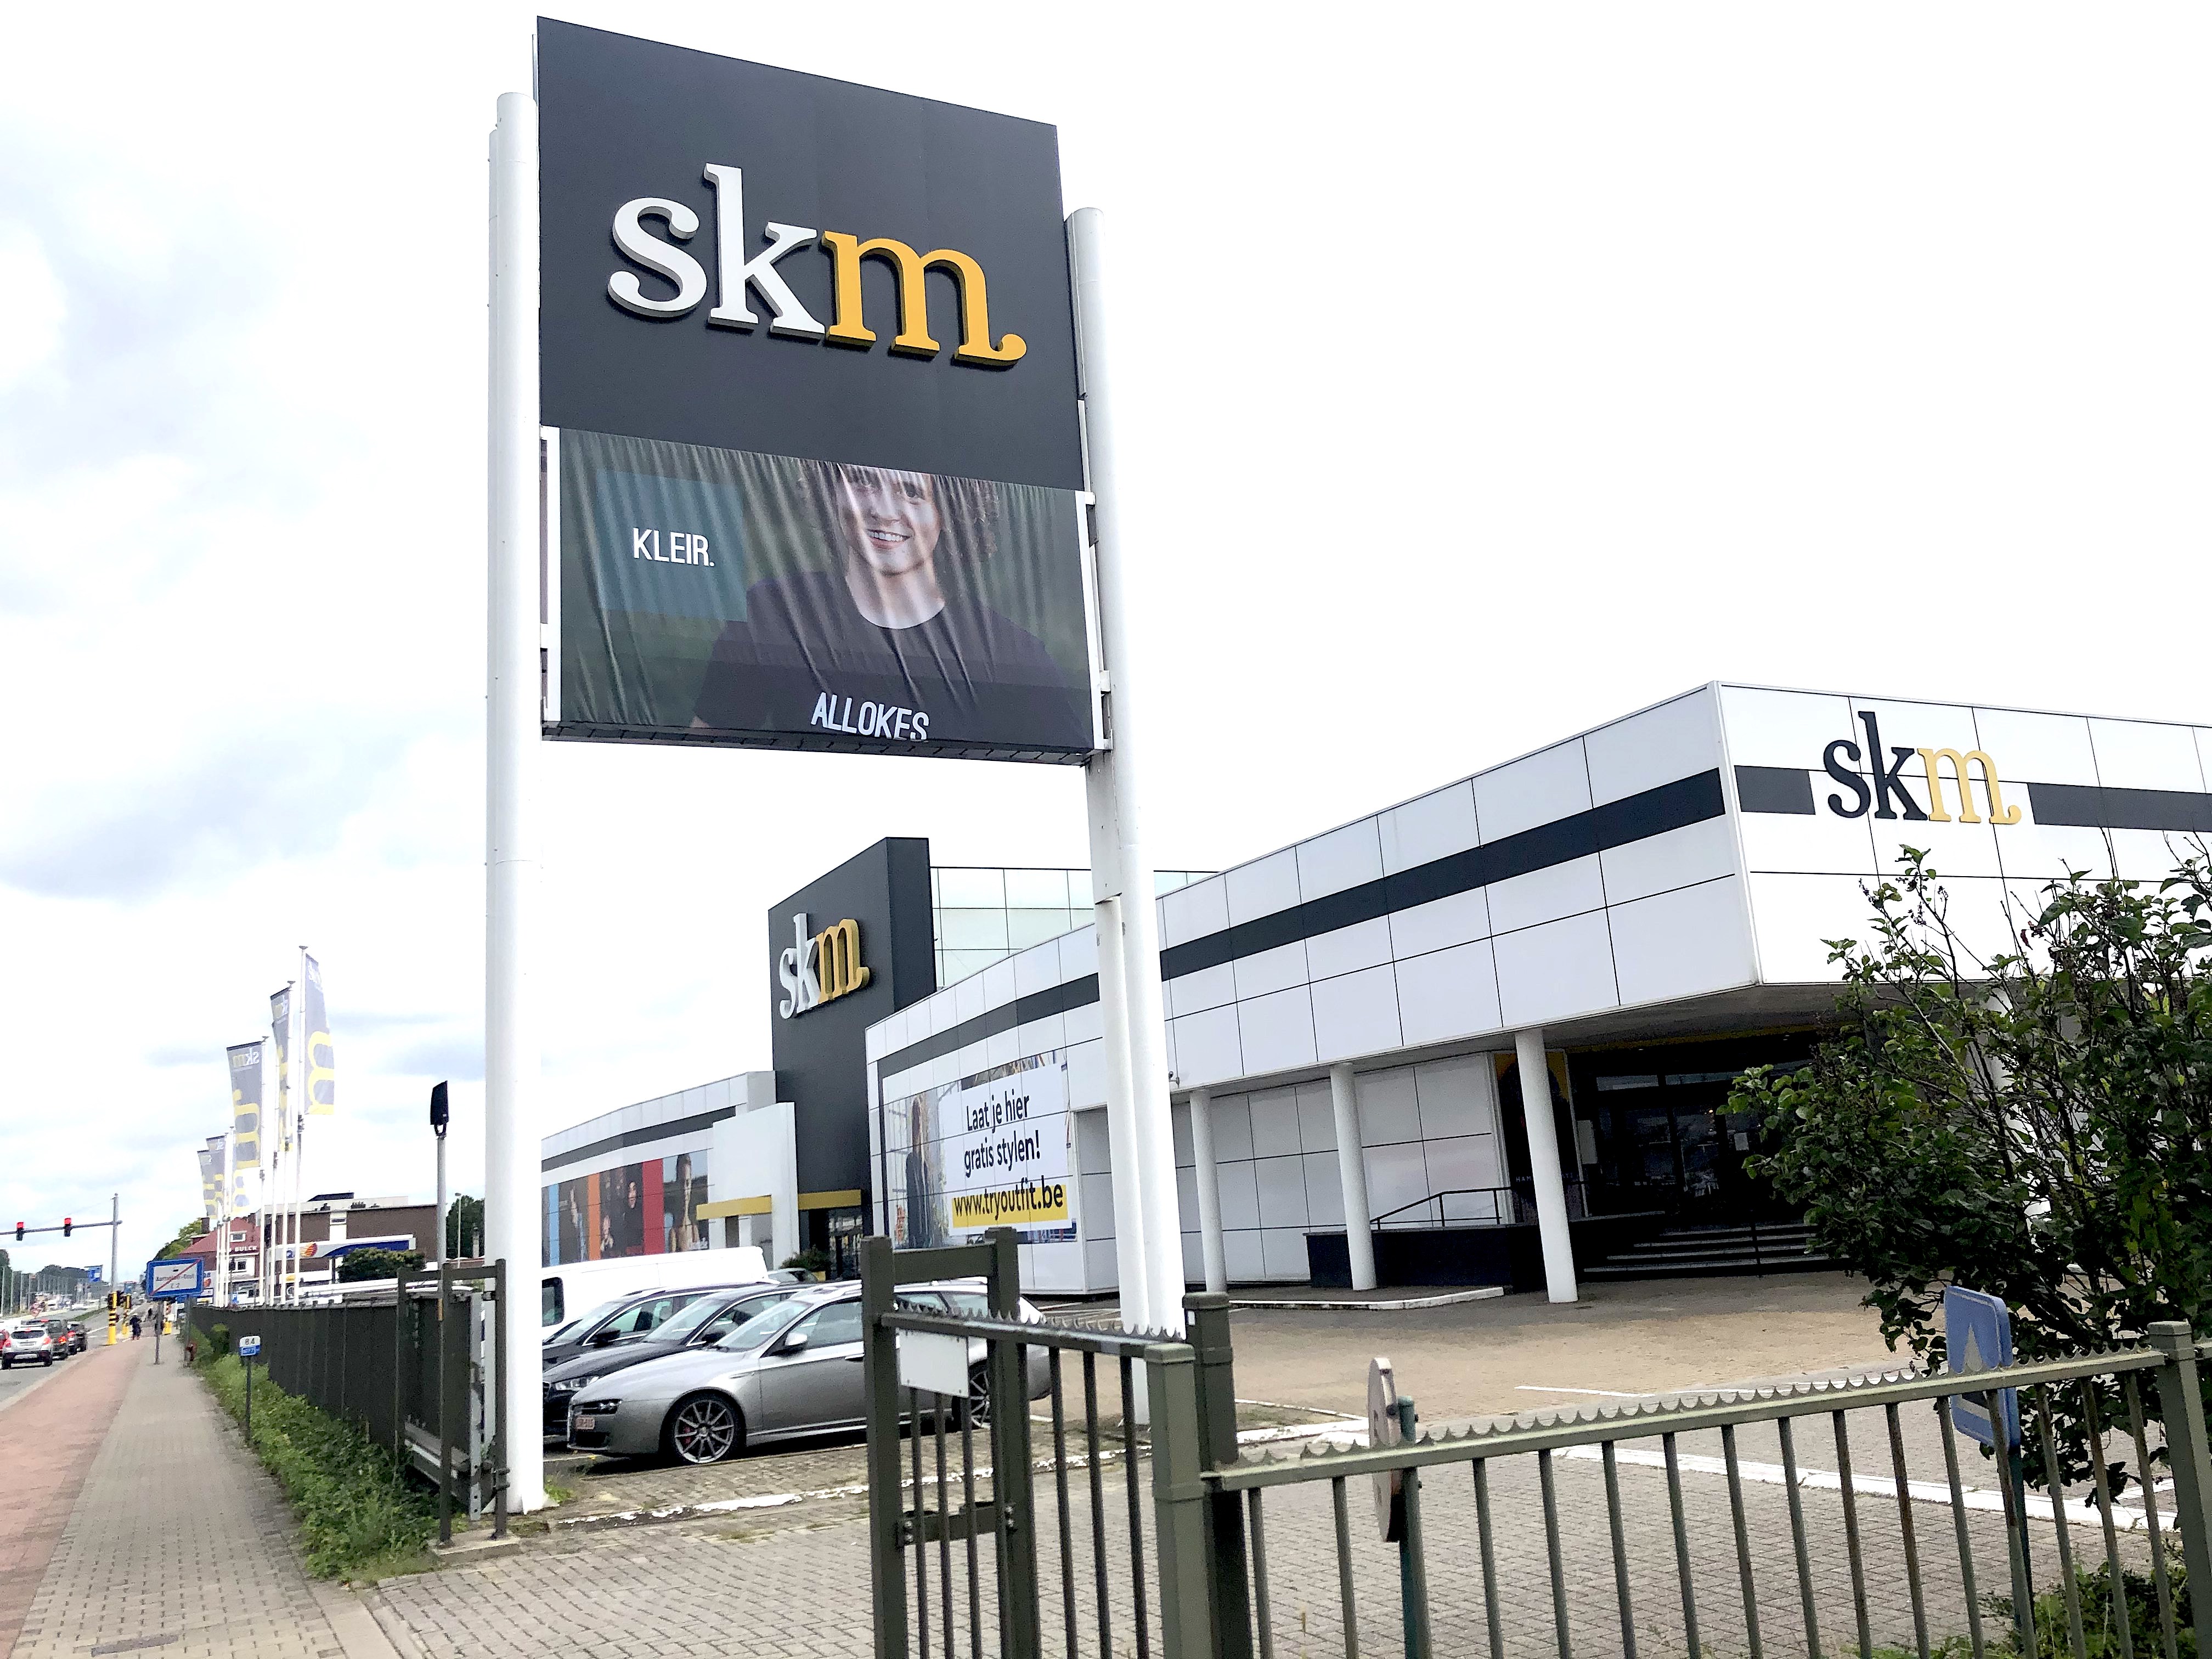 KLEIR Antwerp installs click & collect partnership with SKM via Collectique